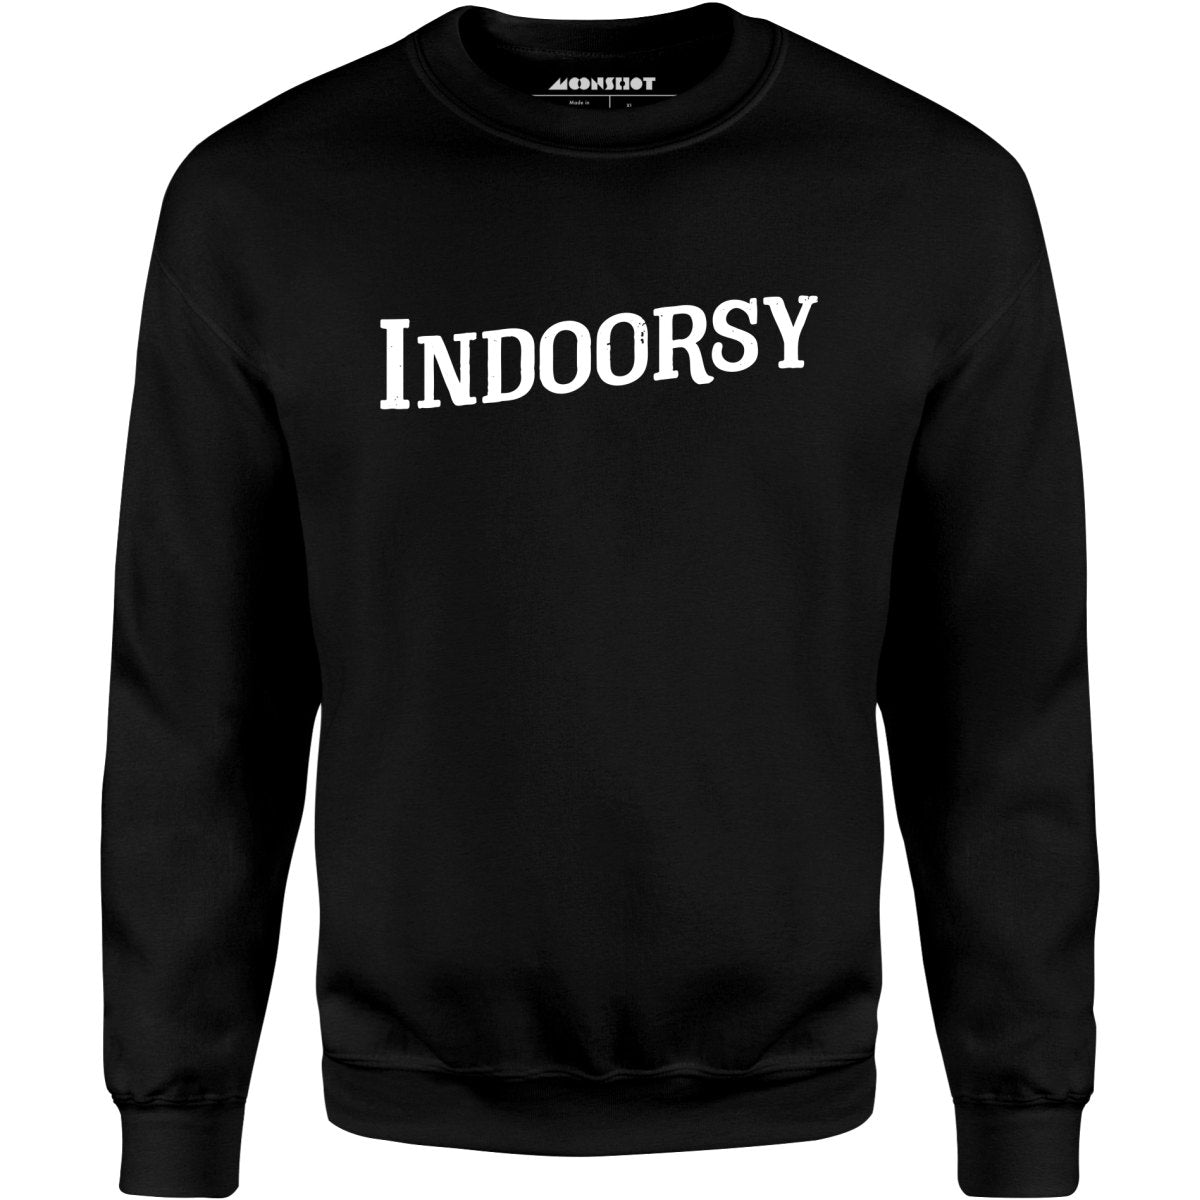 Indoorsy - Unisex Sweatshirt